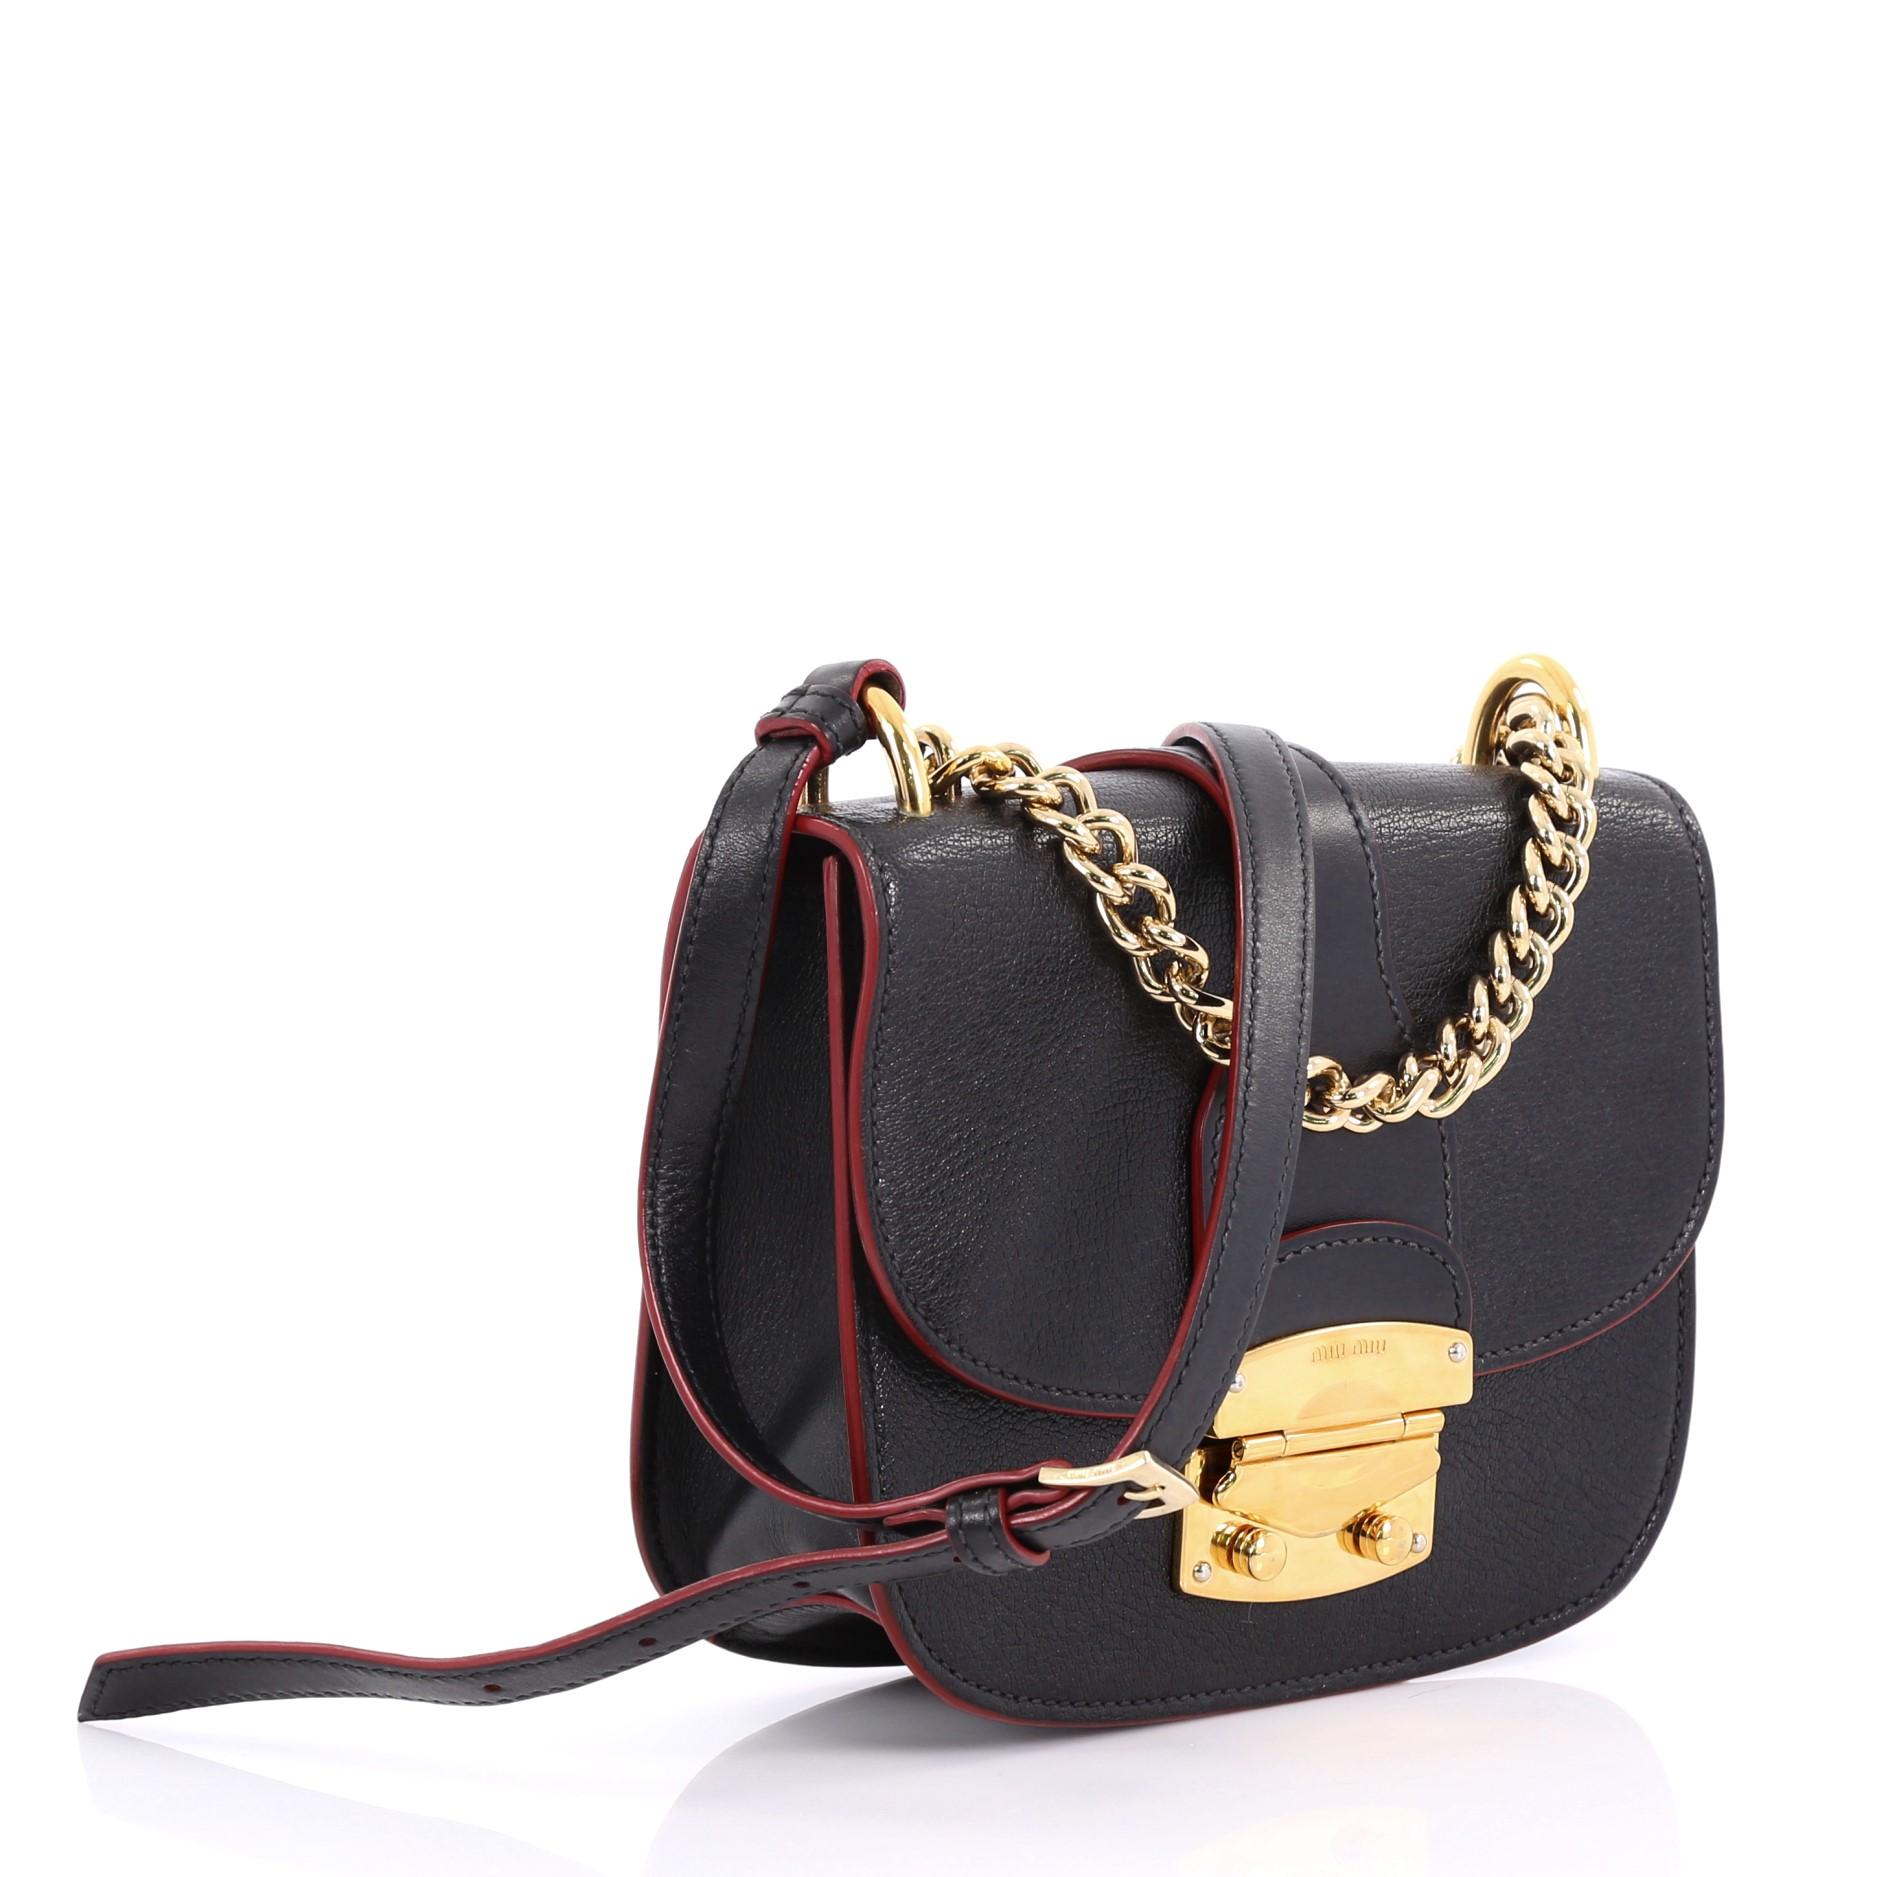 Black Miu Miu Classic Lock and Chain Handbag Leather